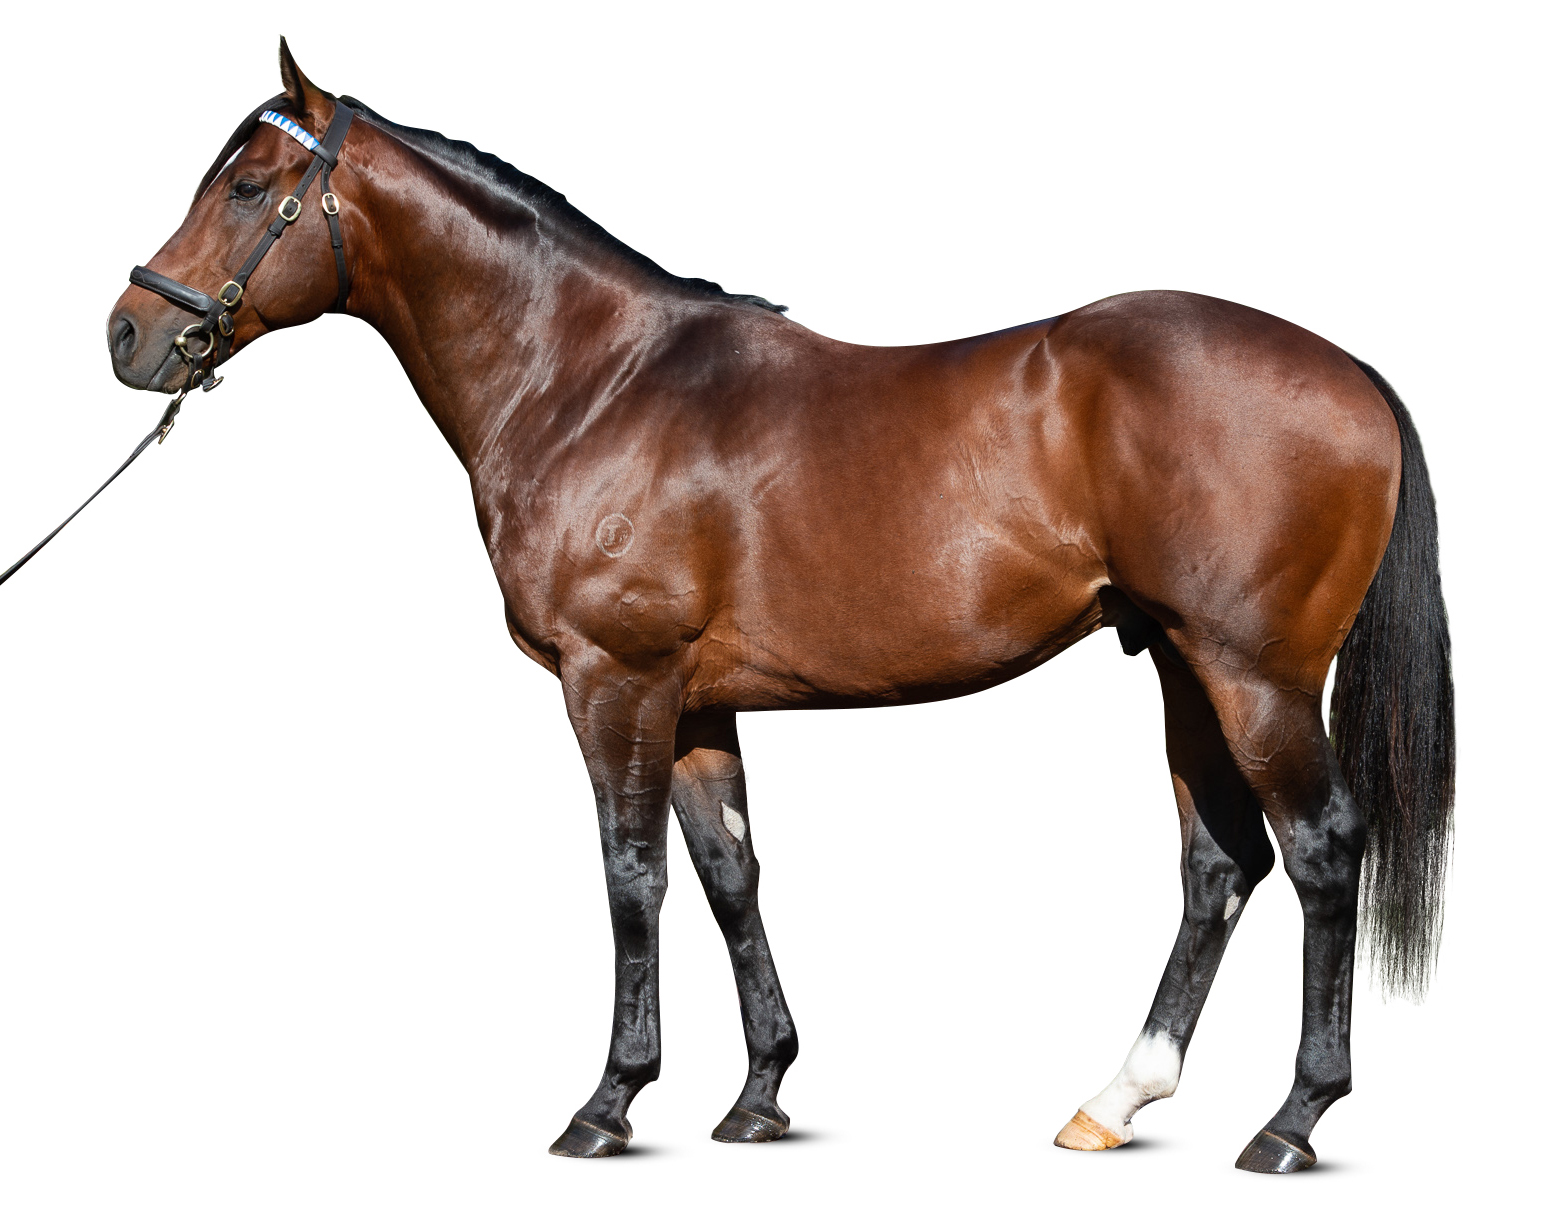 https://www.stallions.com.au/wp-content/uploads/2019/09/conf_Impending_KP_0279_thoroughbred_stallion.jpg